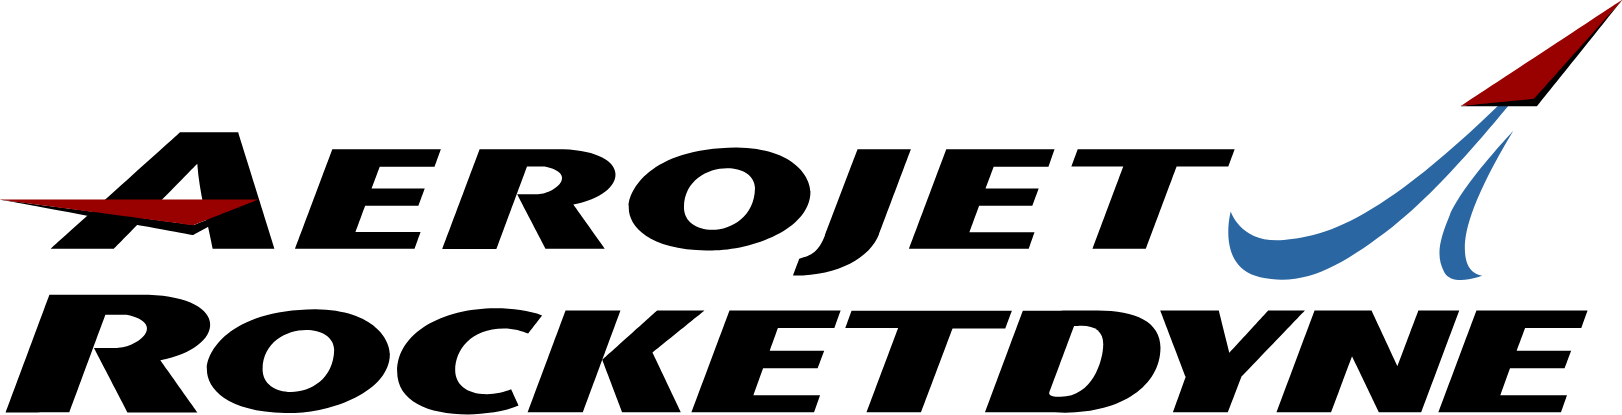 Aerojet Rocketdyne logo large (transparent PNG)